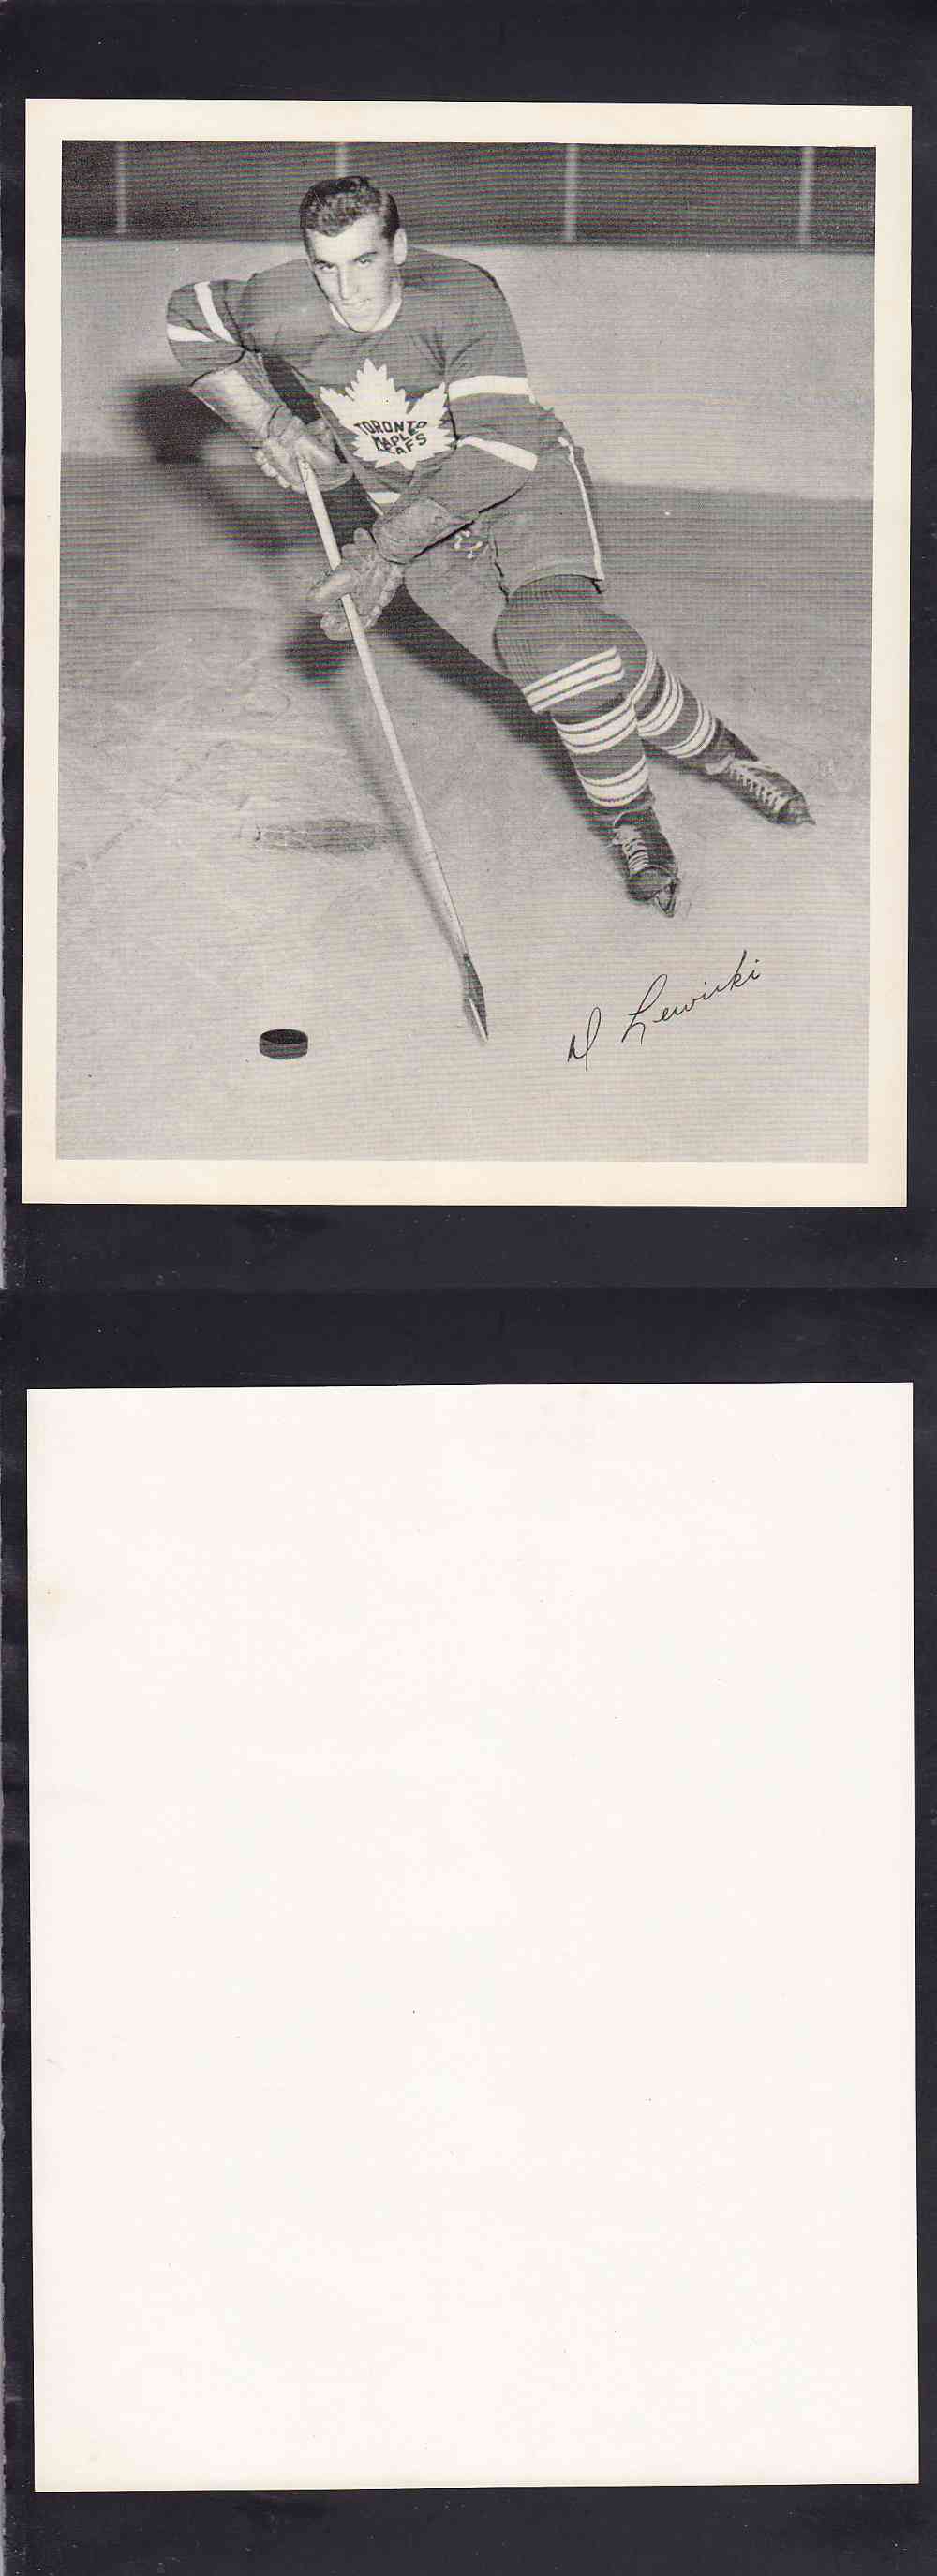 1945-54 QUAKER OATS PHOTO D. LEWICKI photo